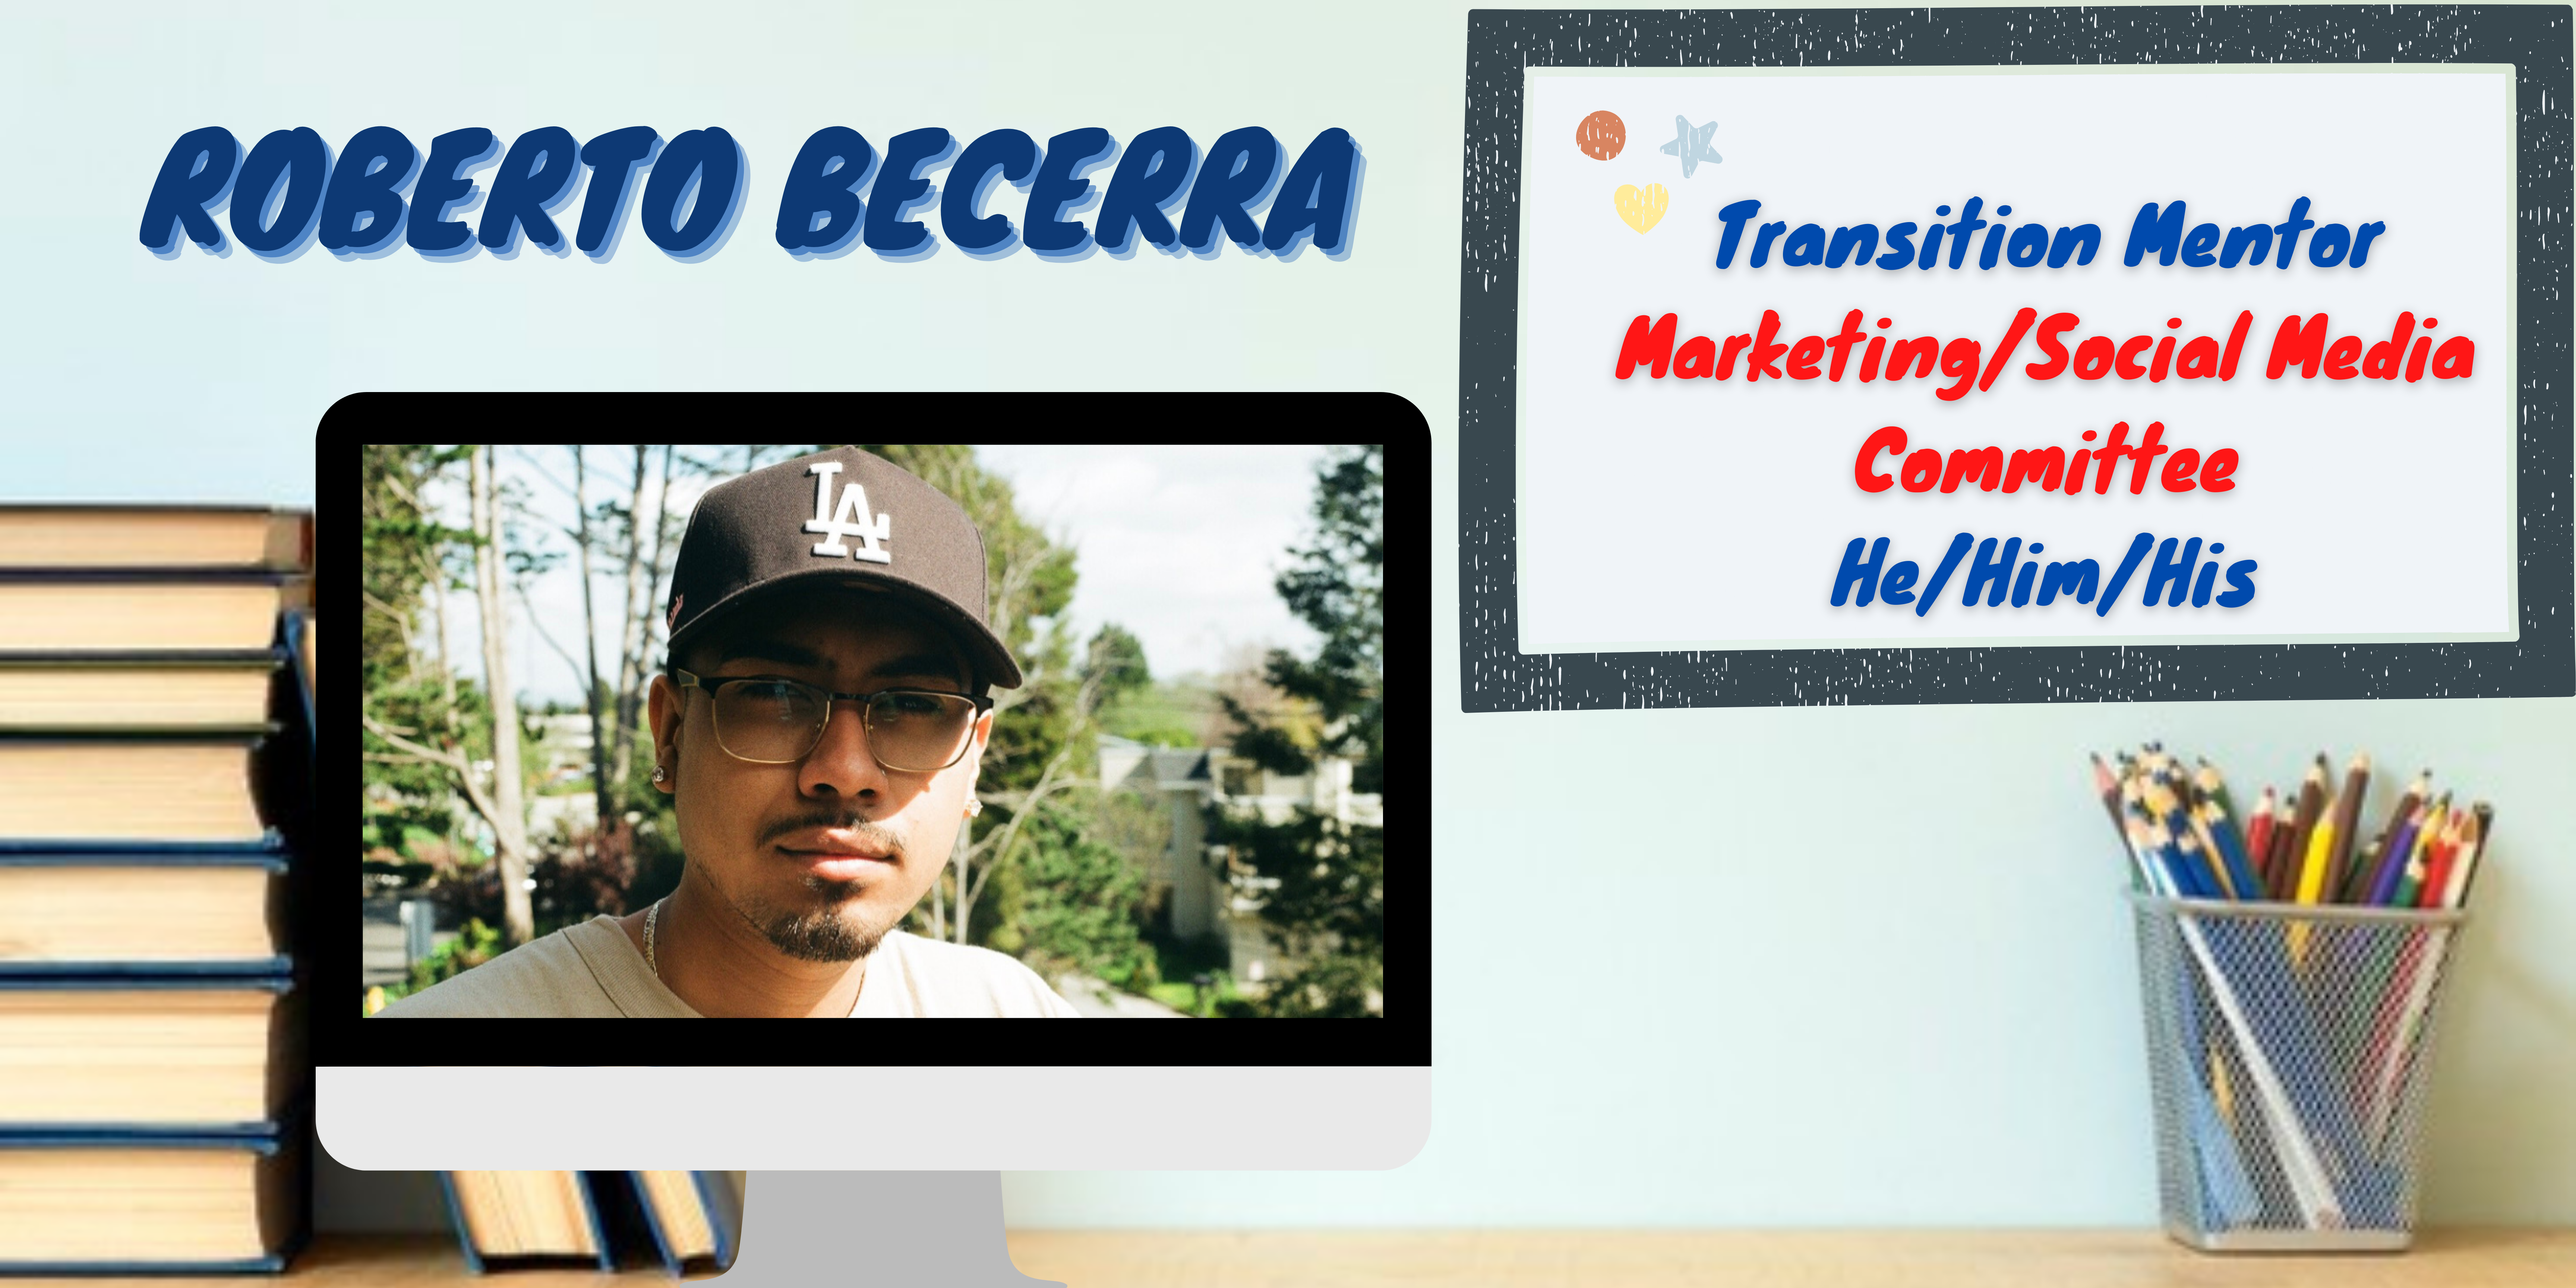 Transition Mentor: Roberto Becerra, pronouns he/him/his, Marketing/Social Media Committee